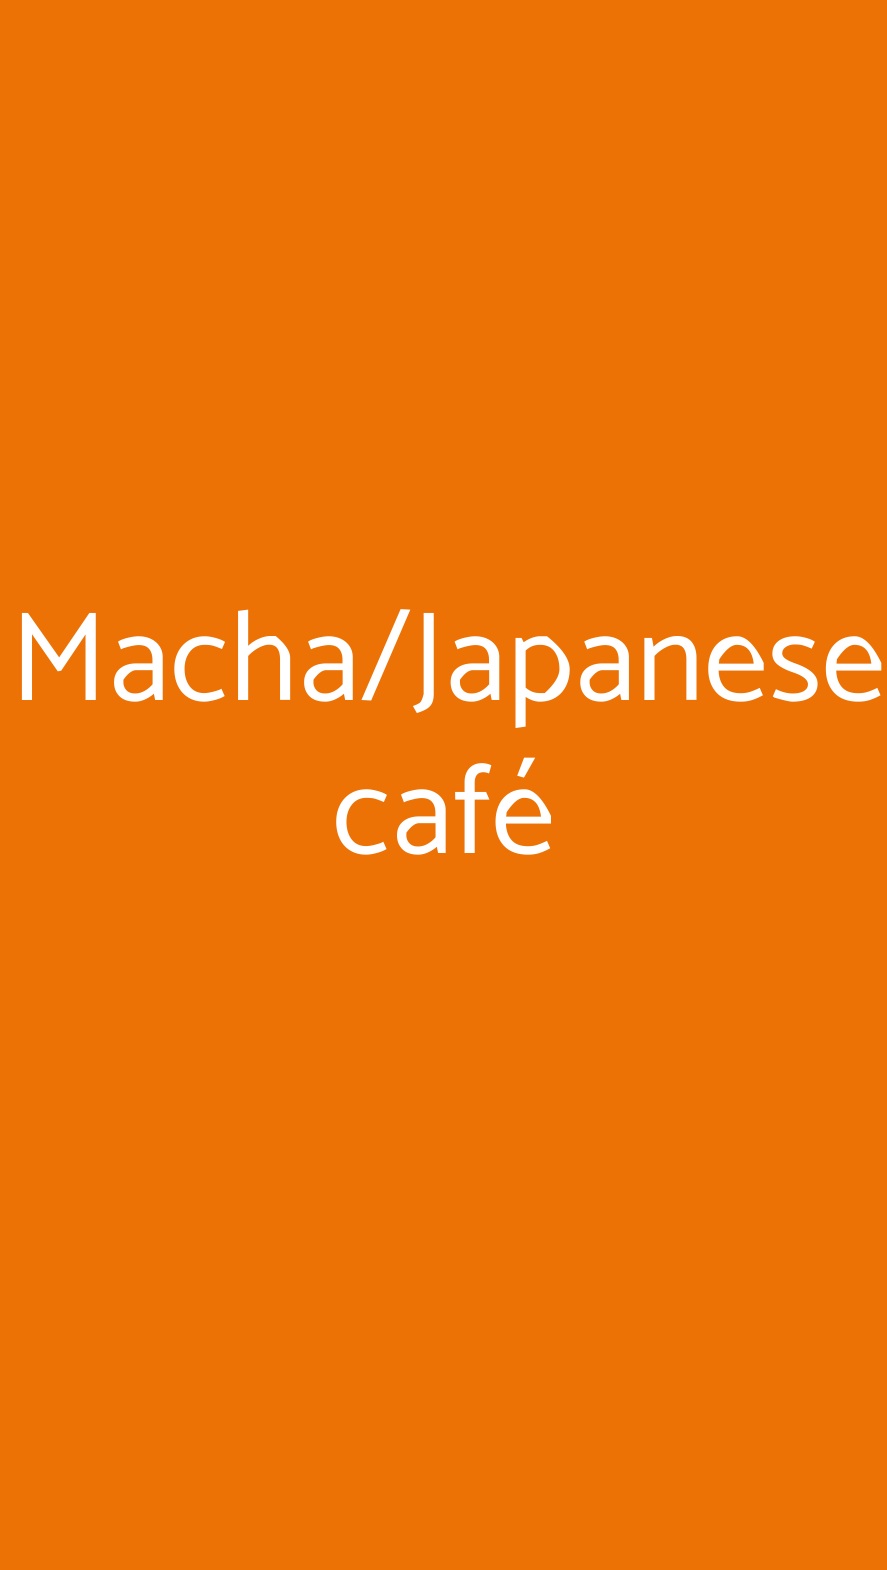 Macha/Japanese café Milano menù 1 pagina